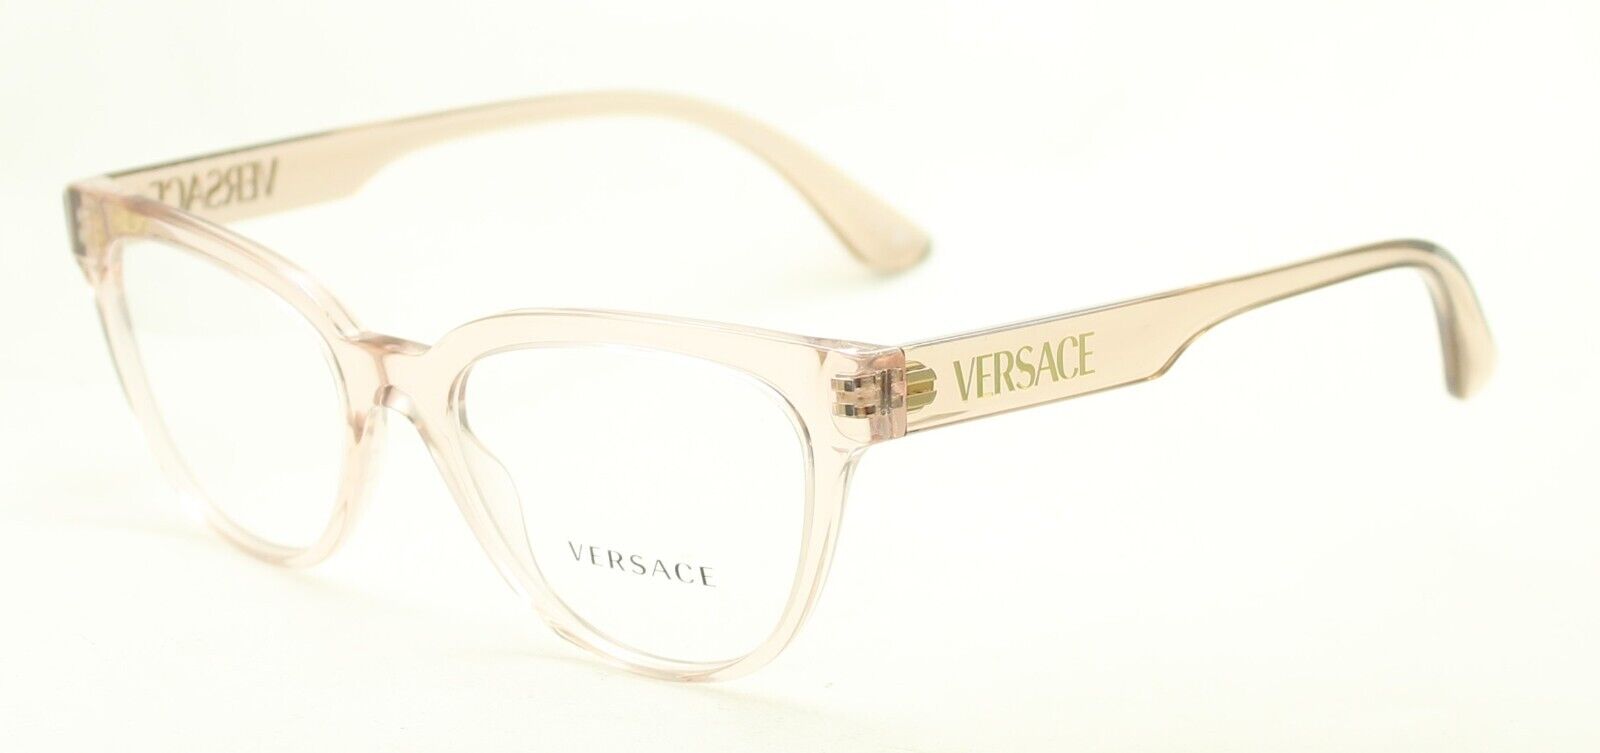 squat Demon Opera VERSACE 3315 5339 52mm Eyewear FRAMES Glasses RX Optical Eyeglasses New -  Italy - GGV Eyewear